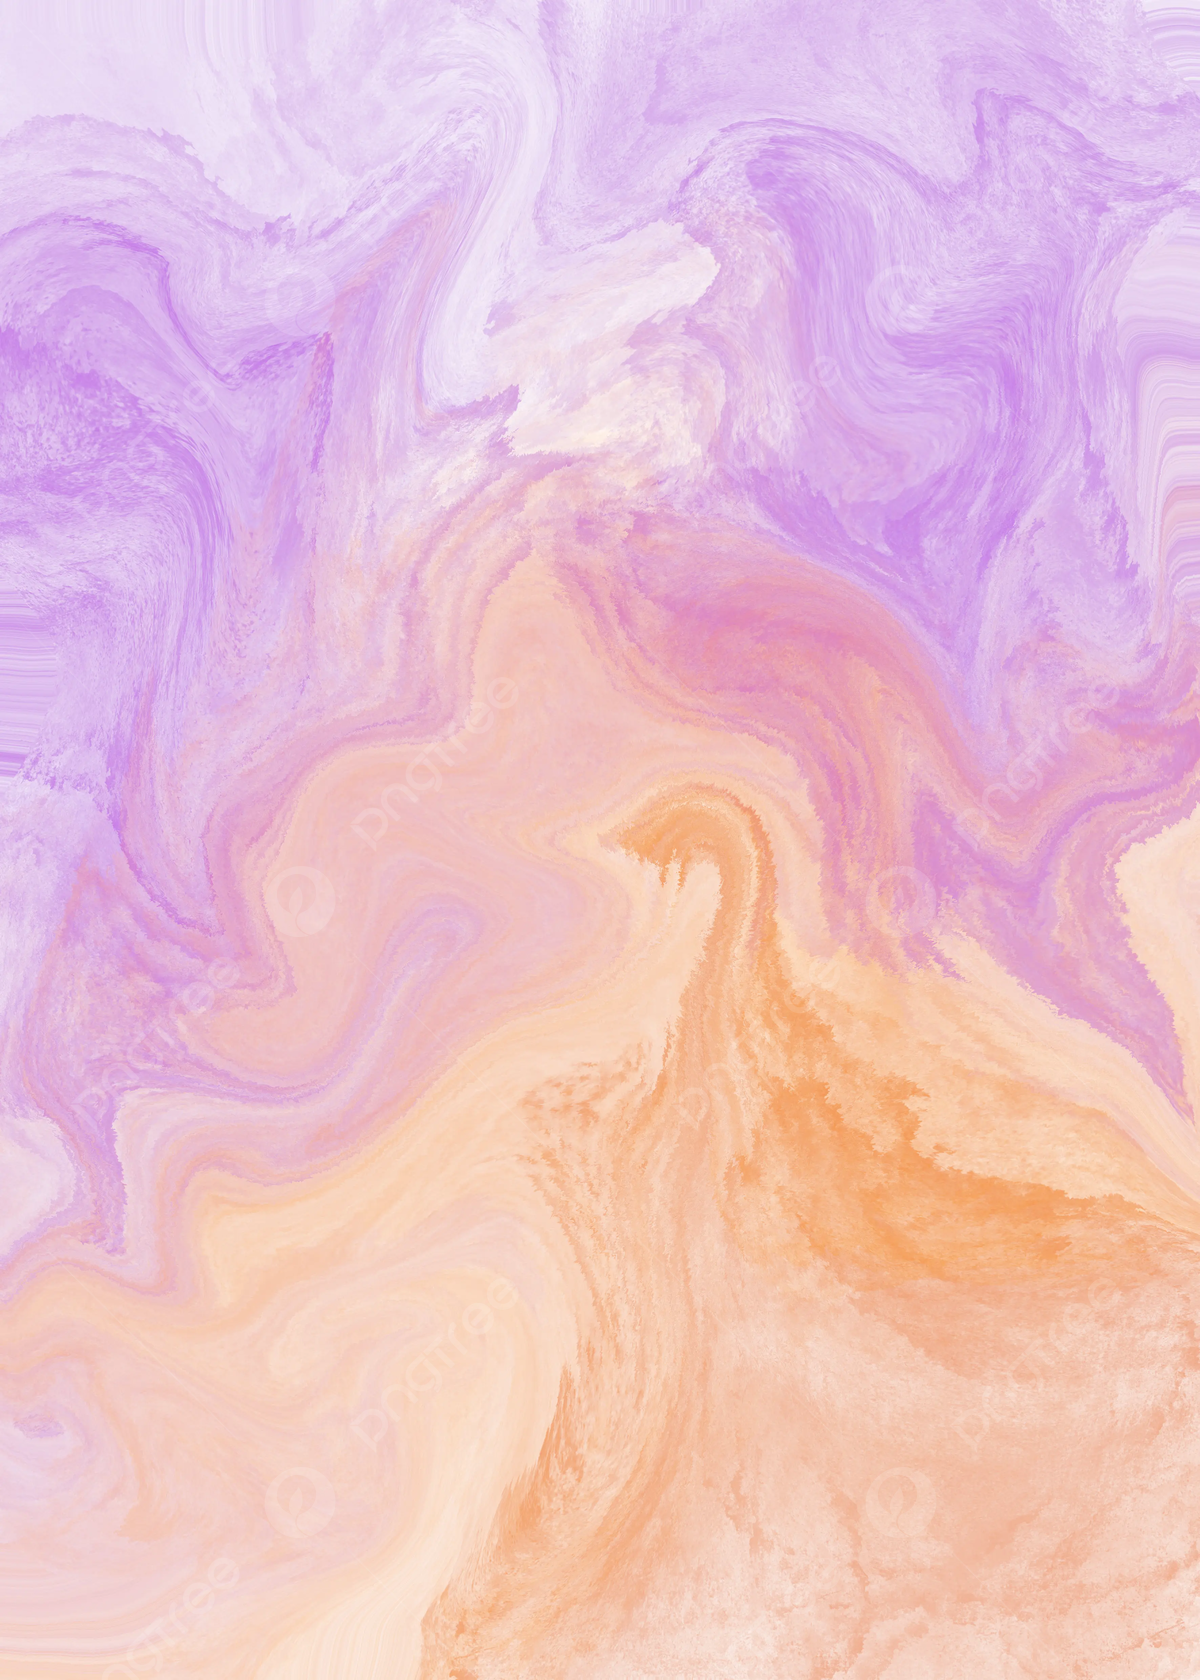  Design Hintergrundbild 1200x1680. Purple Fluid Art Aesthetic Background Design Wallpaper Image For Free Download